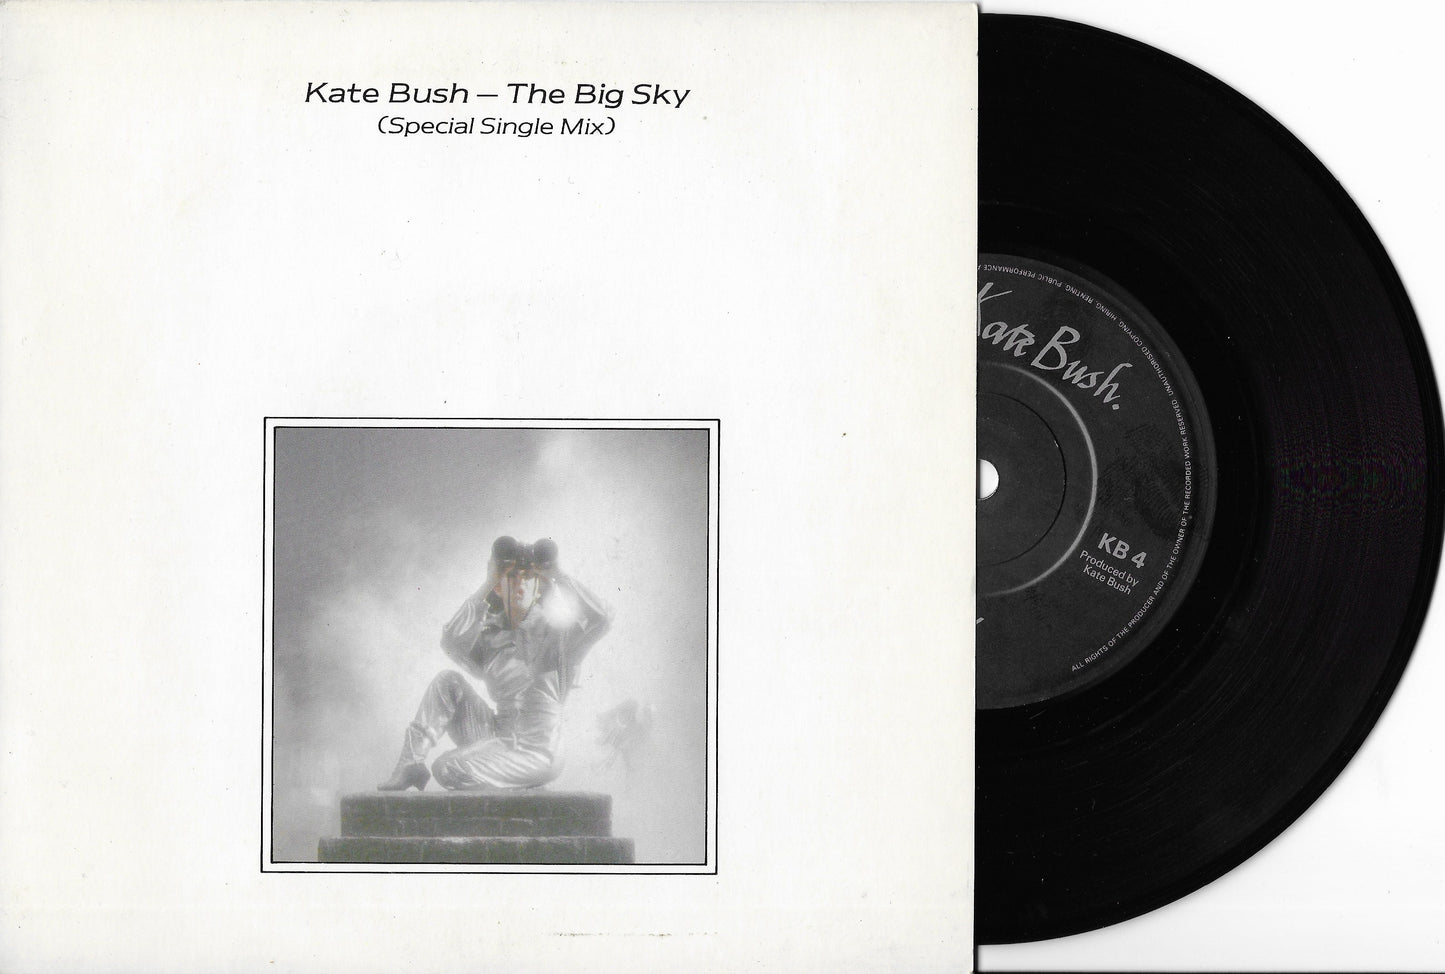 KATE BUSH - The Big Sky (Special Single Mix) (pressage UK)